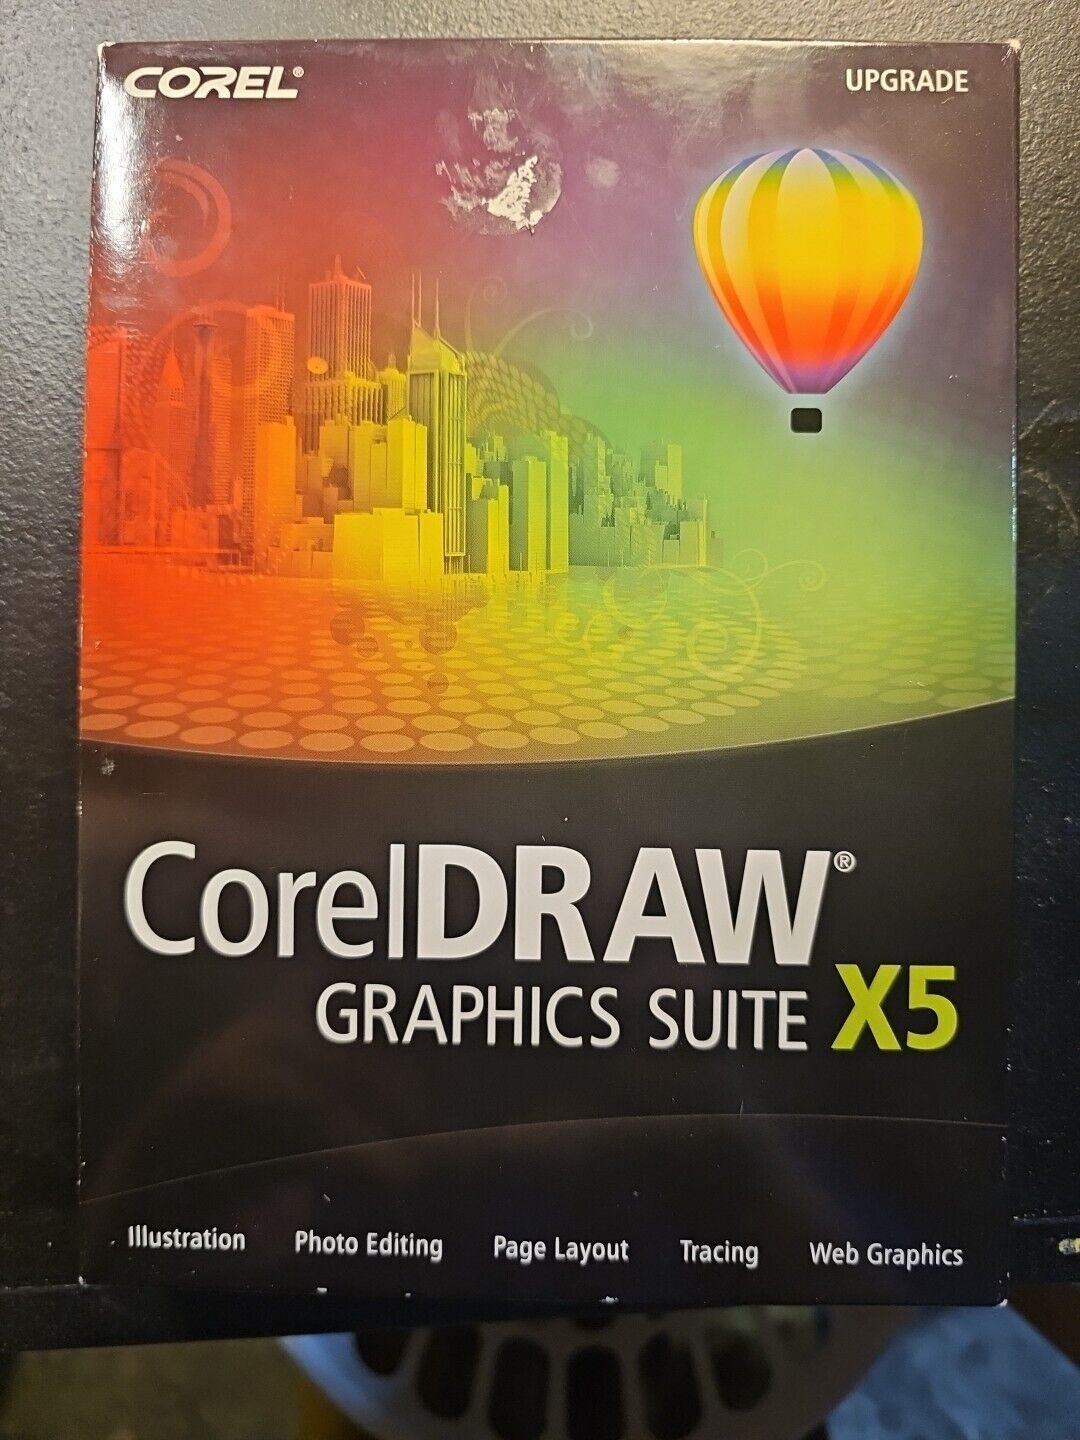 Coreldraw Graphics Suite X5 Guidebook Corel Upgrade.